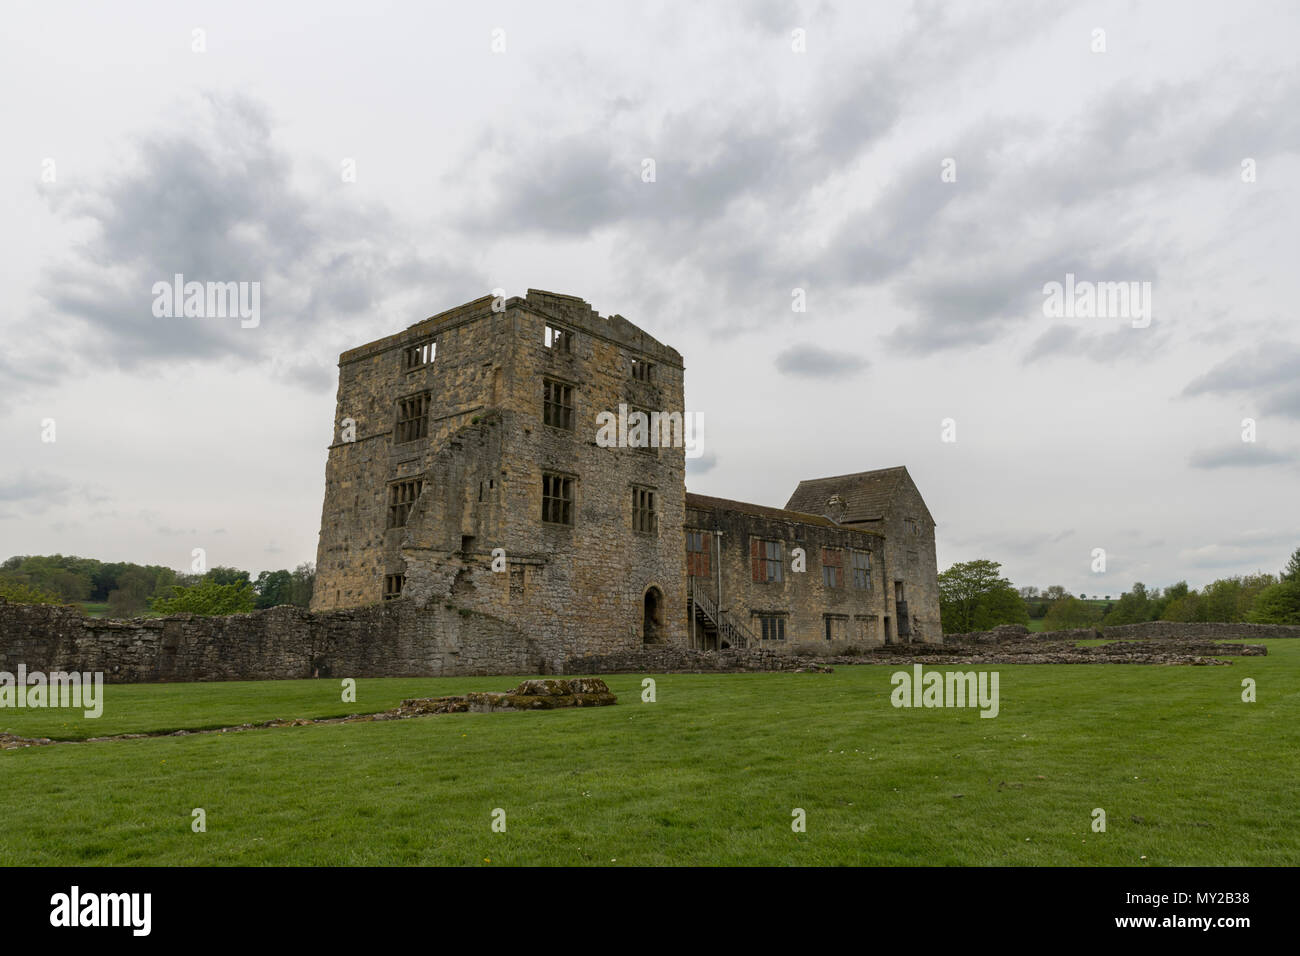 Castello di Helmsley, Helmsley, North Yorkshire Moors, North Yorkshire, Inghilterra Foto Stock